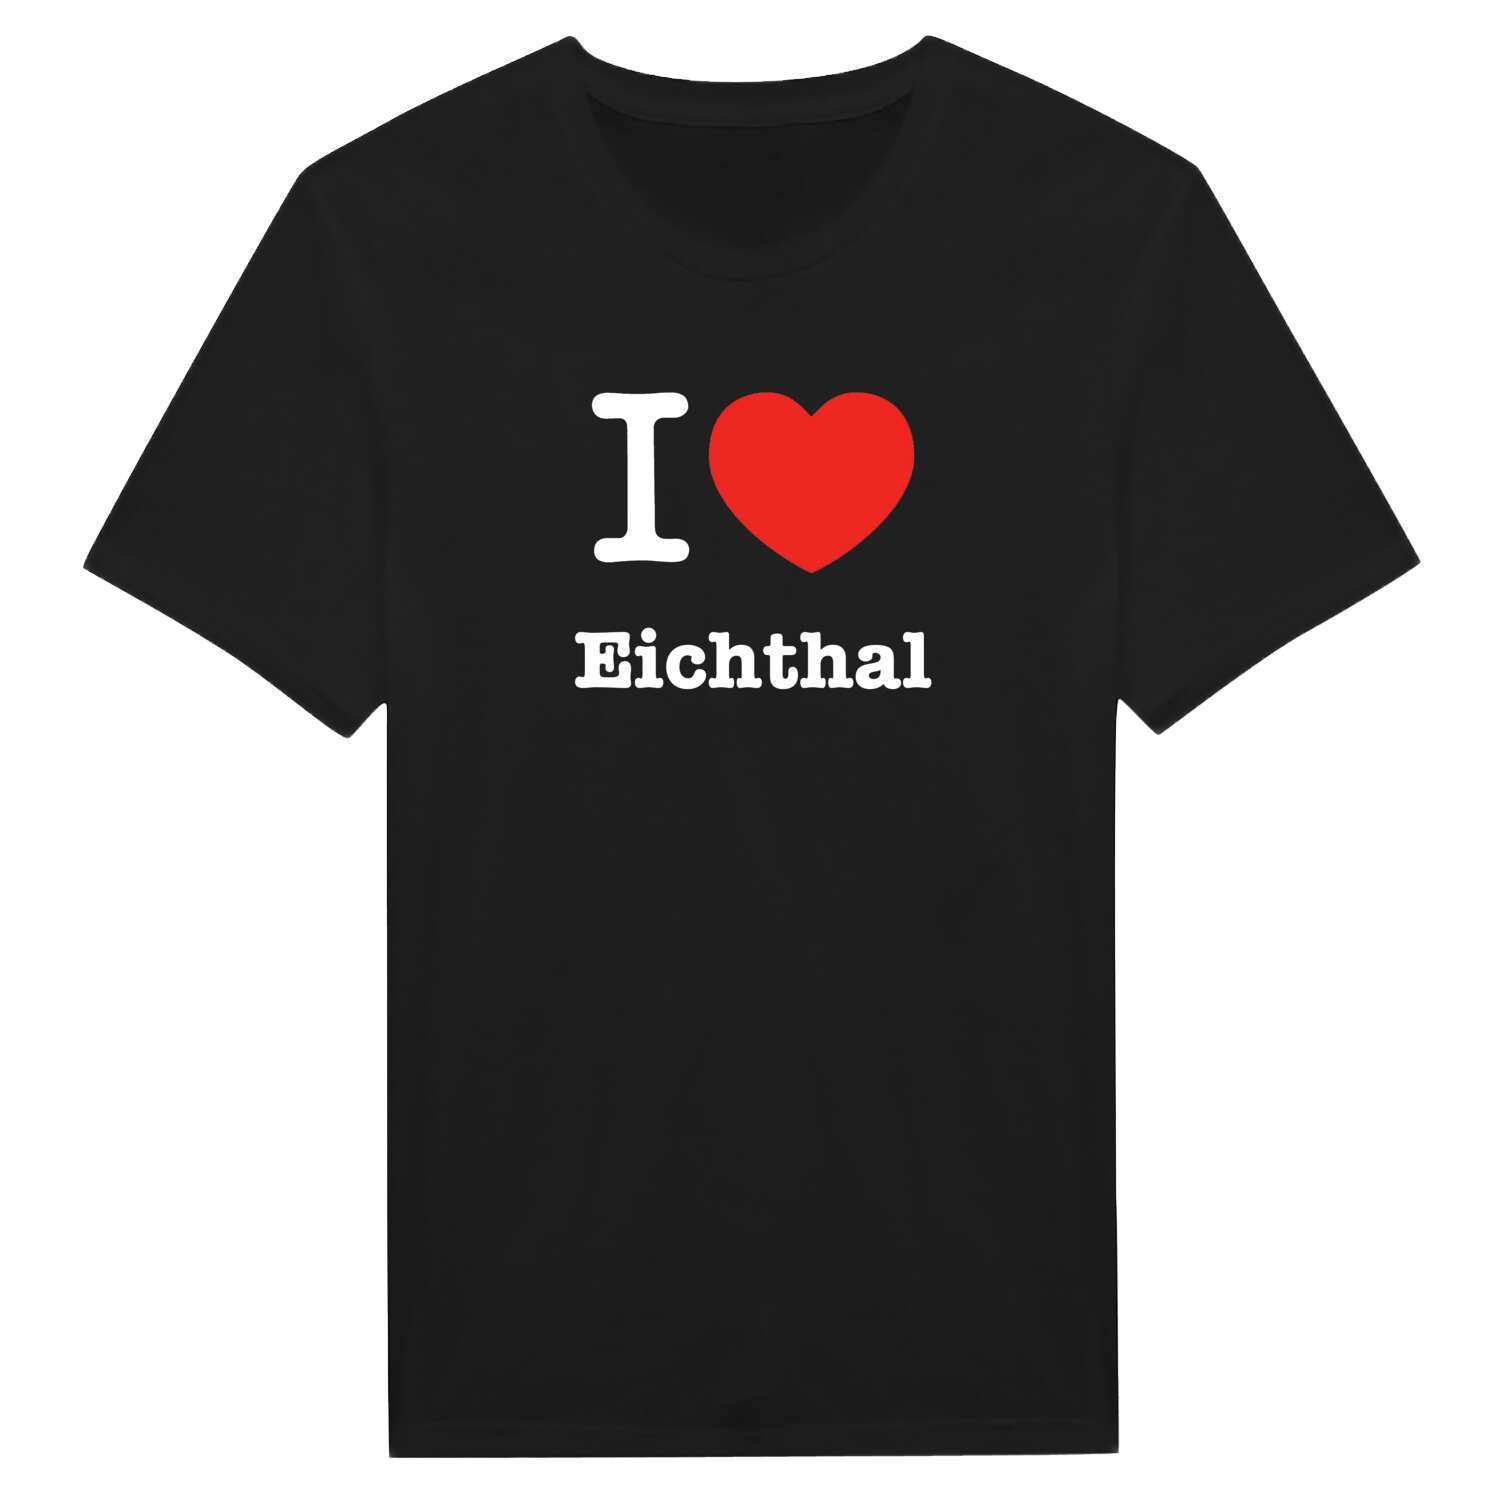 Eichthal T-Shirt »I love«